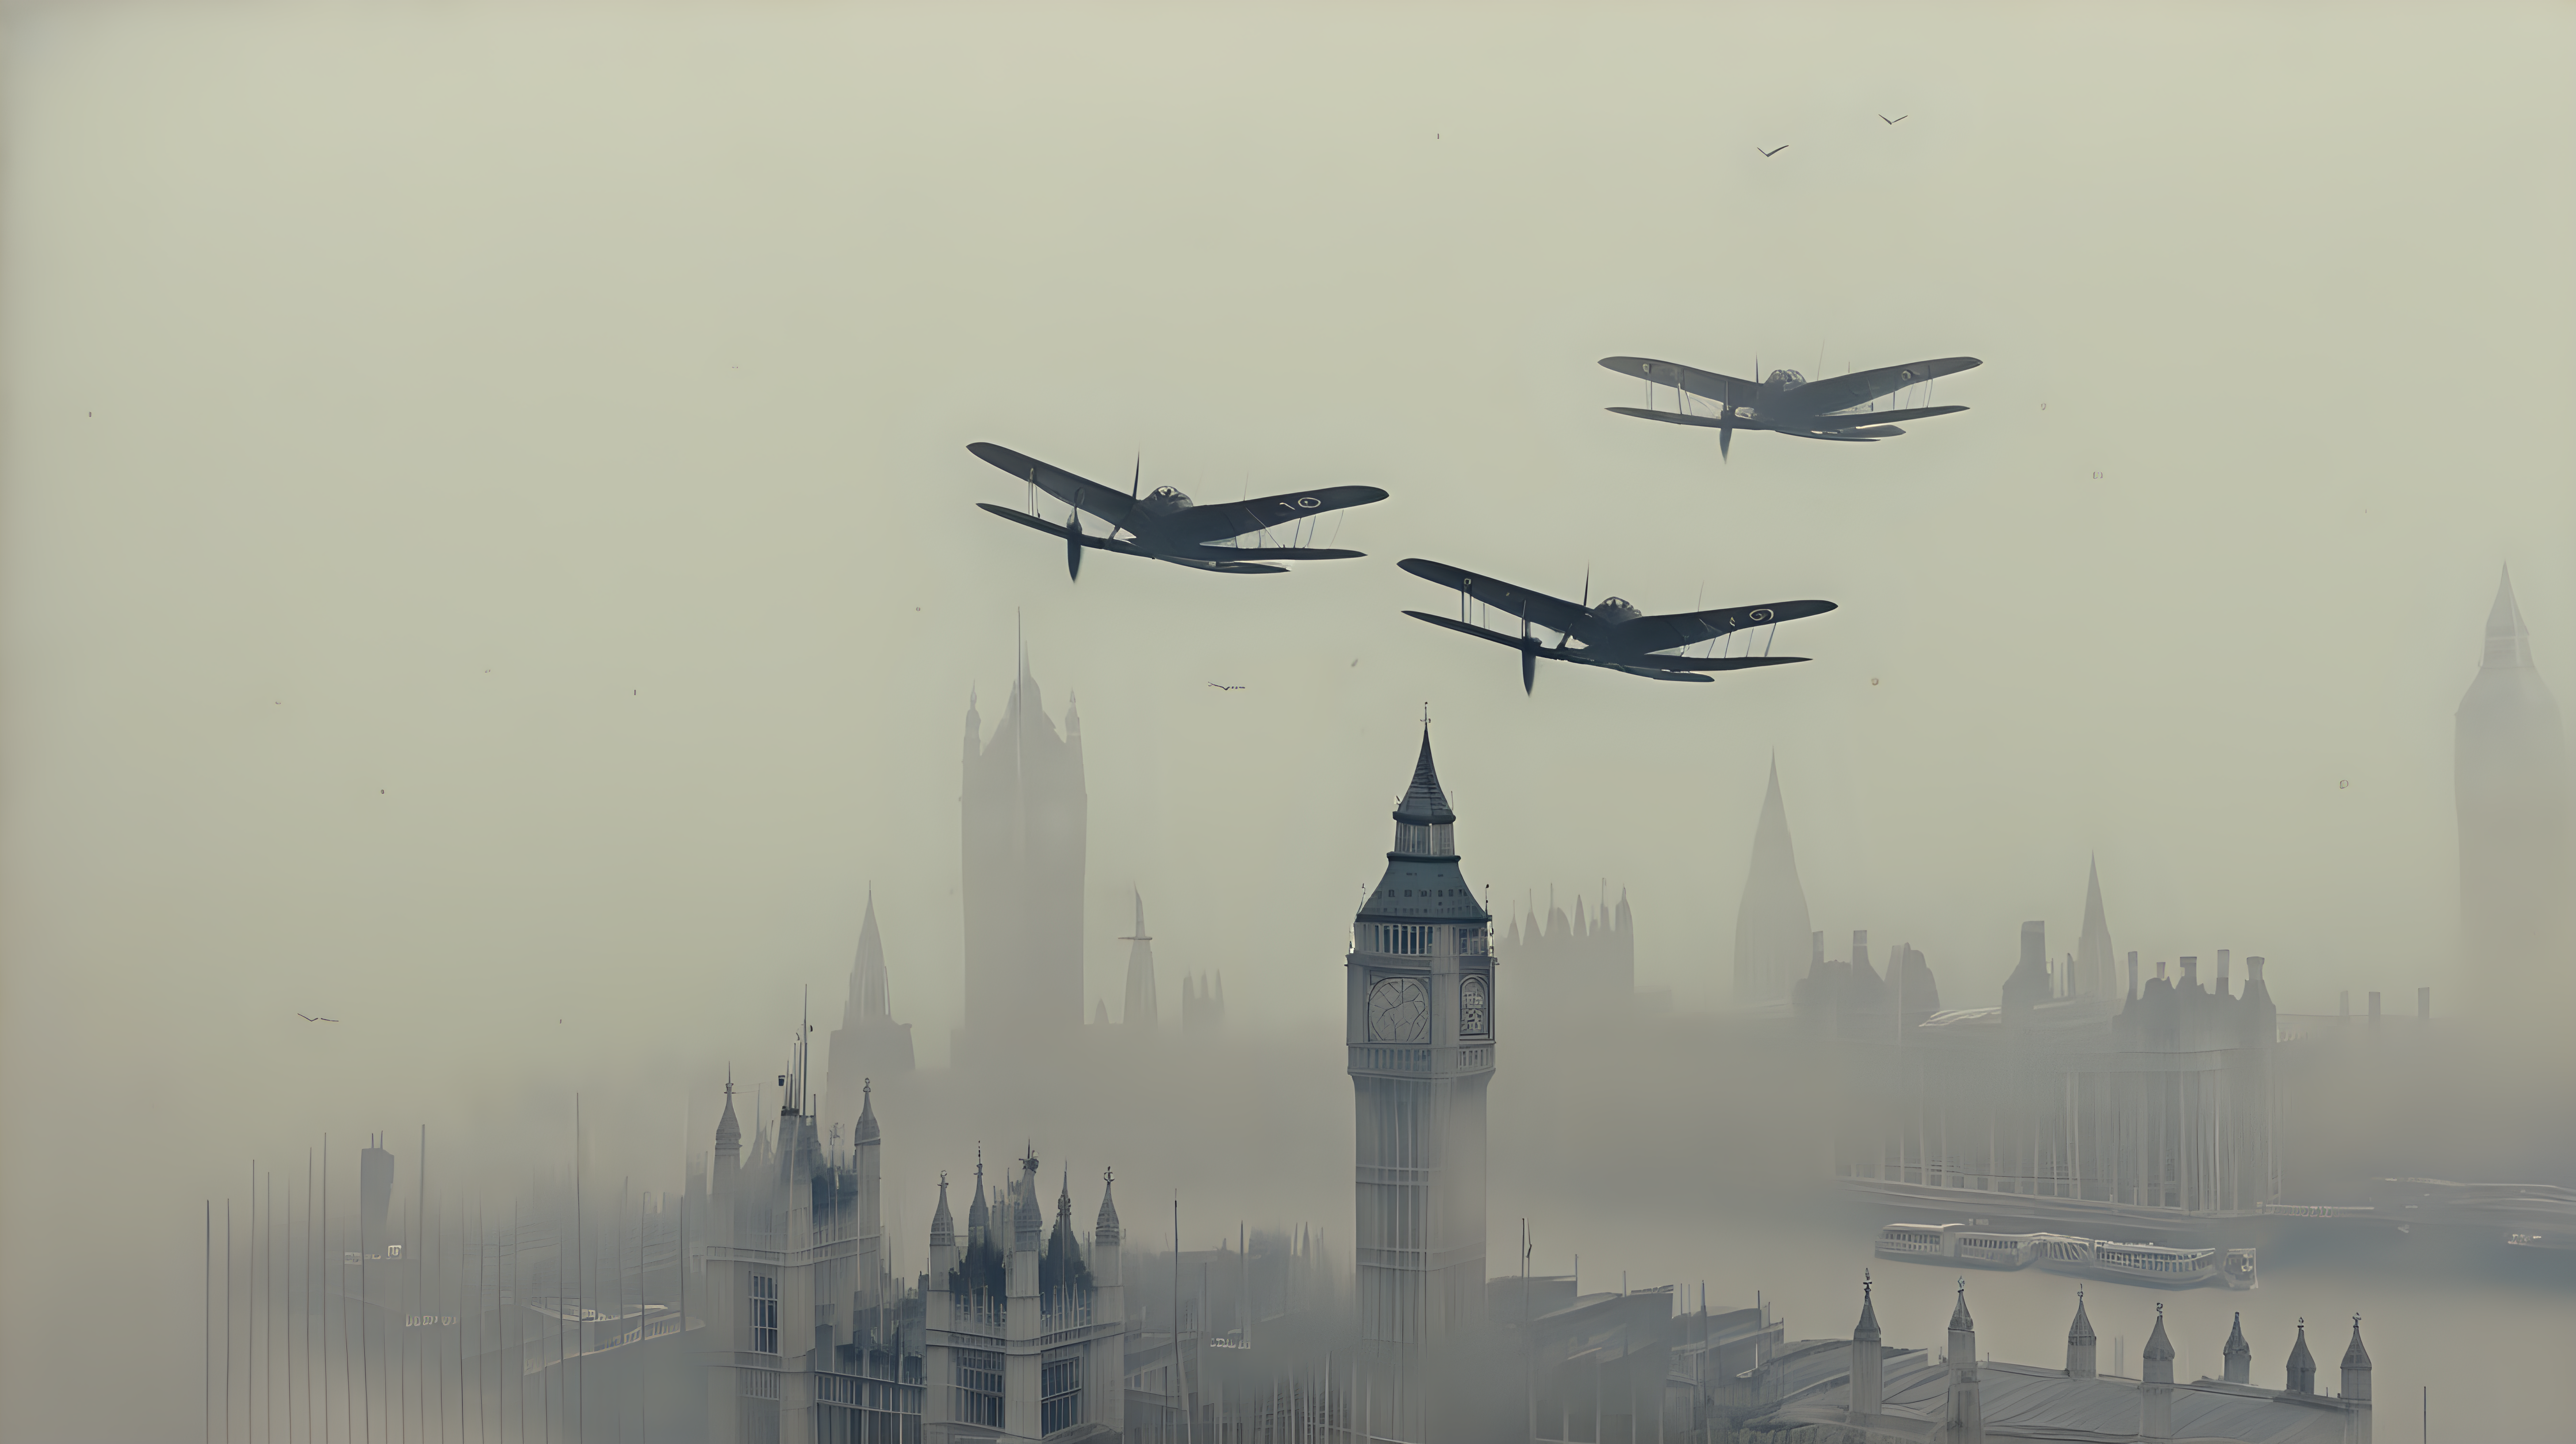 WW fighter planes flying over London Bridge shrouded